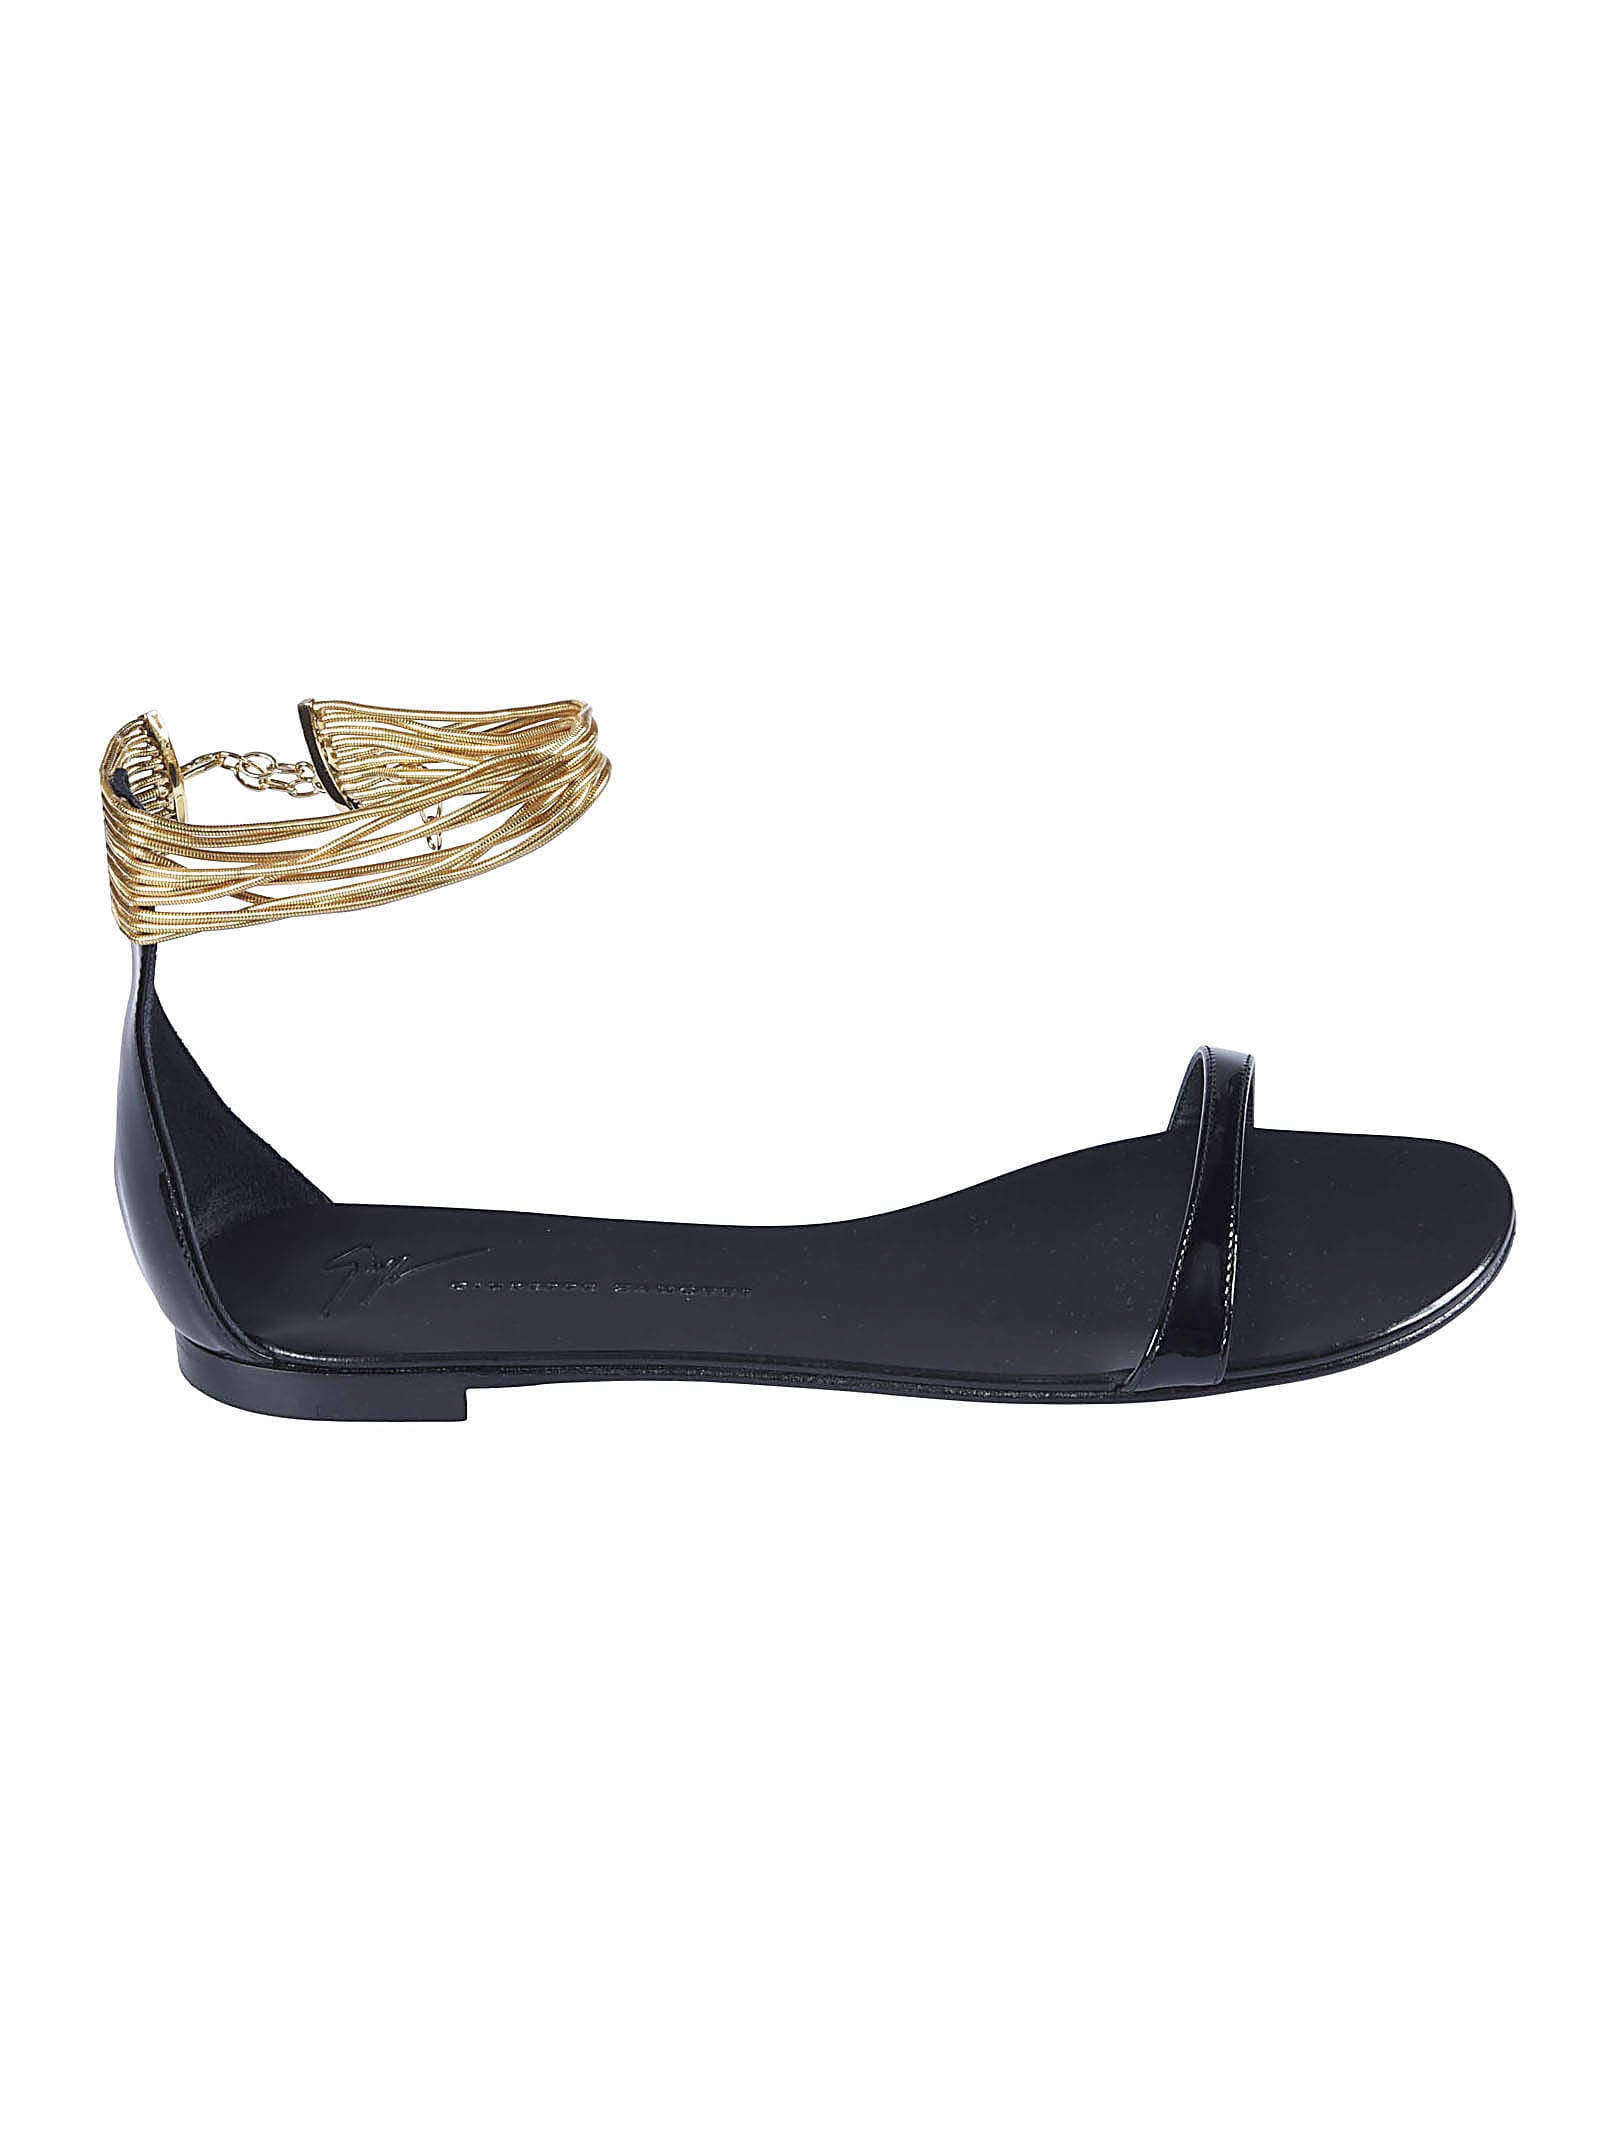 Giuseppe Zanotti Vernice Flat Sandals